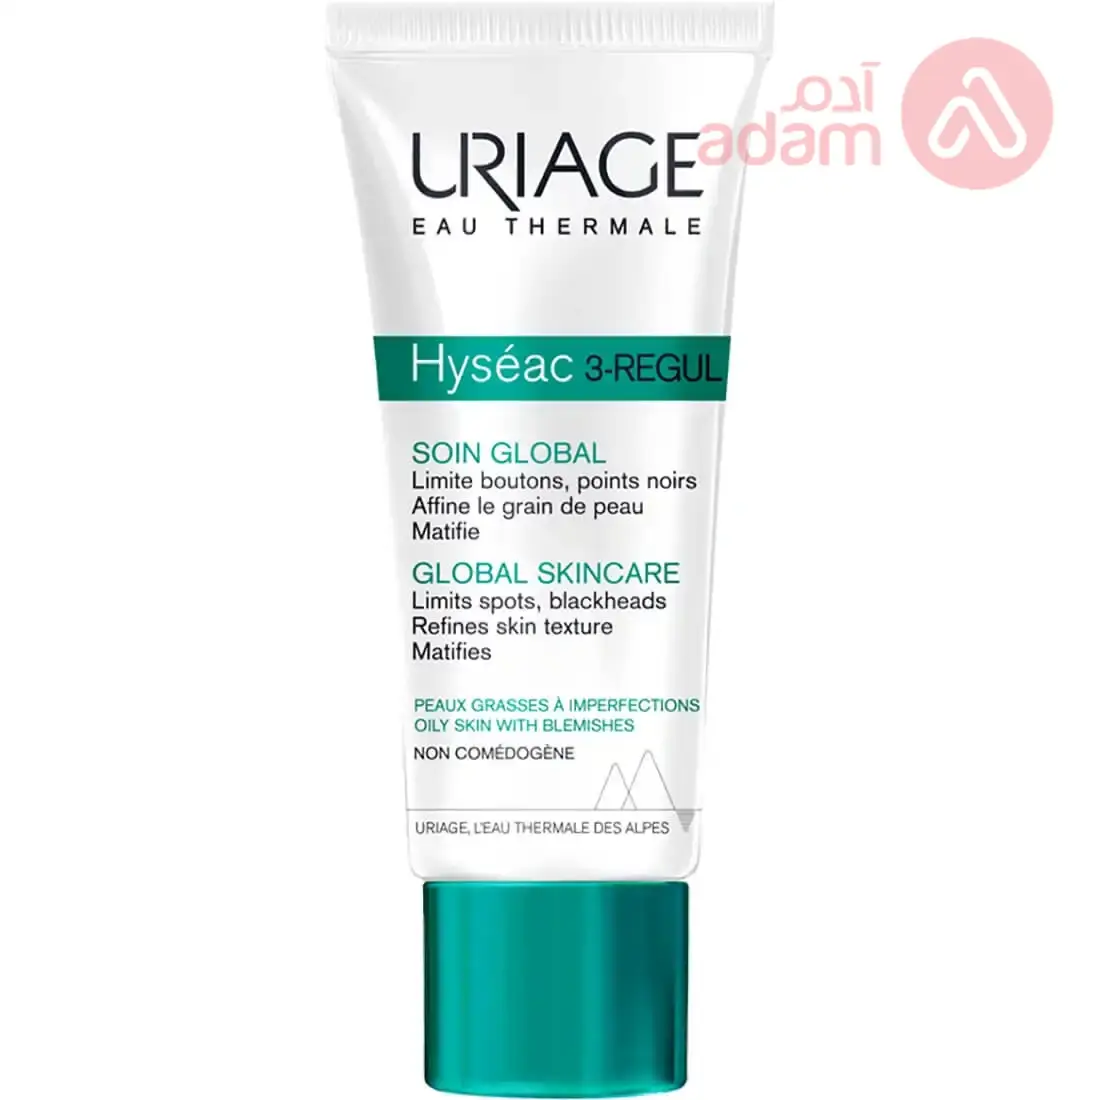 Uriage Hyseac 3-Regul Refines Skin Texture, Anti-Spots and Blackheads| 40Ml